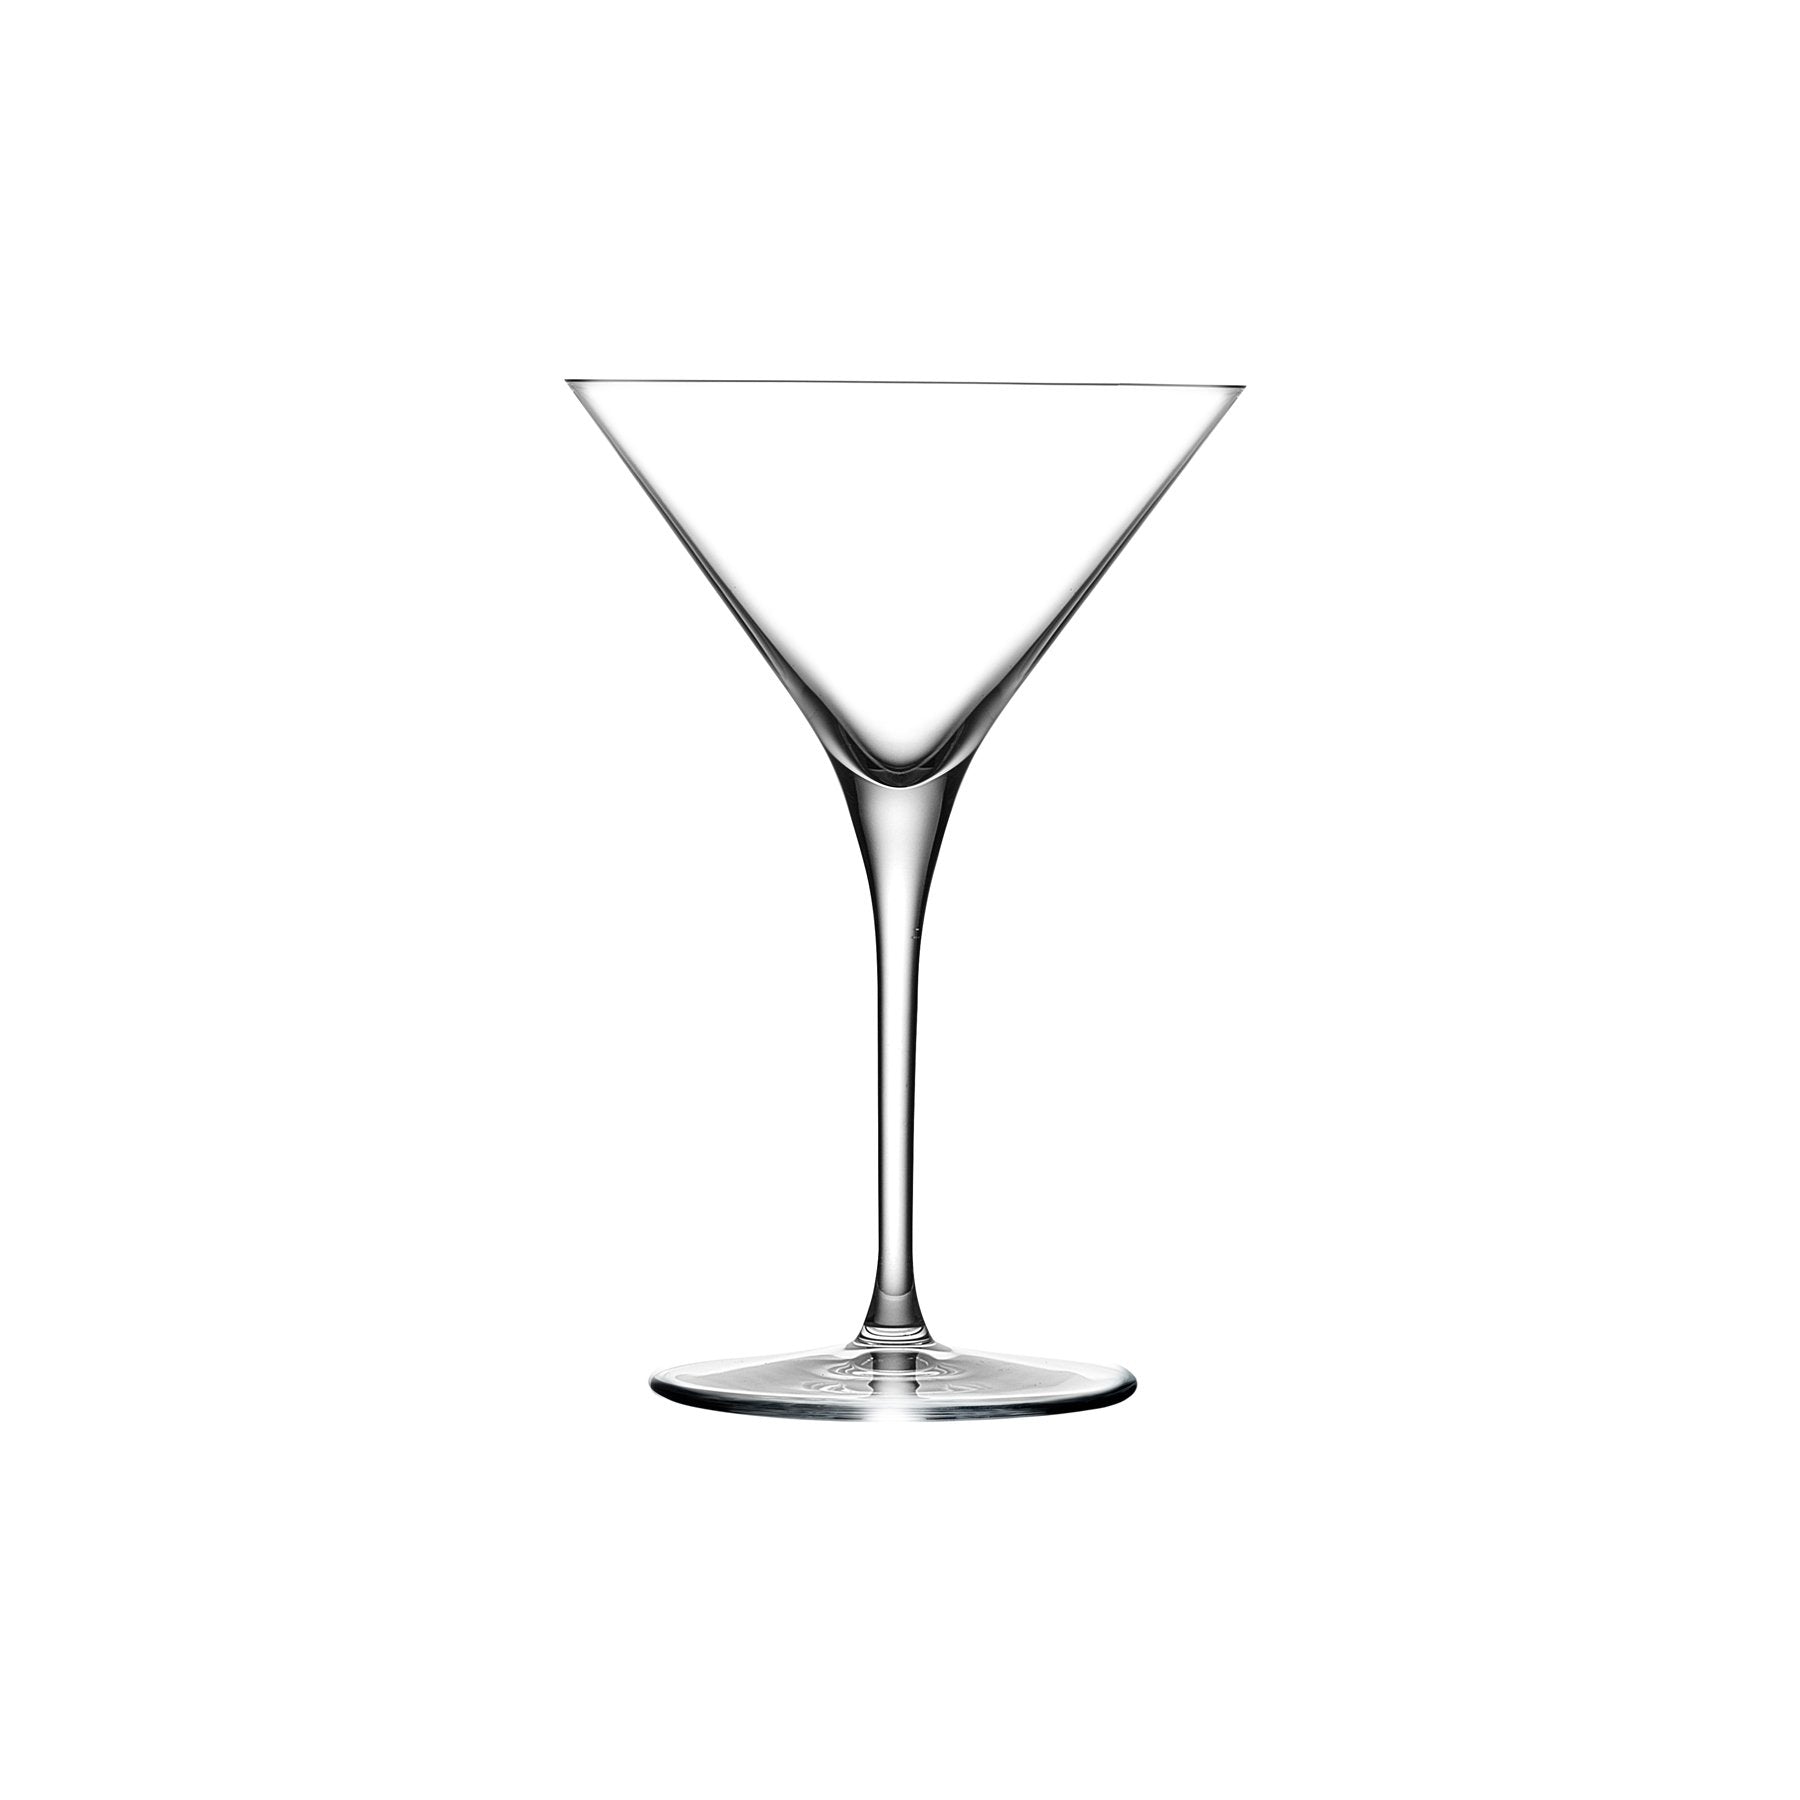 Vintage İkili Martini Kadehi Seti